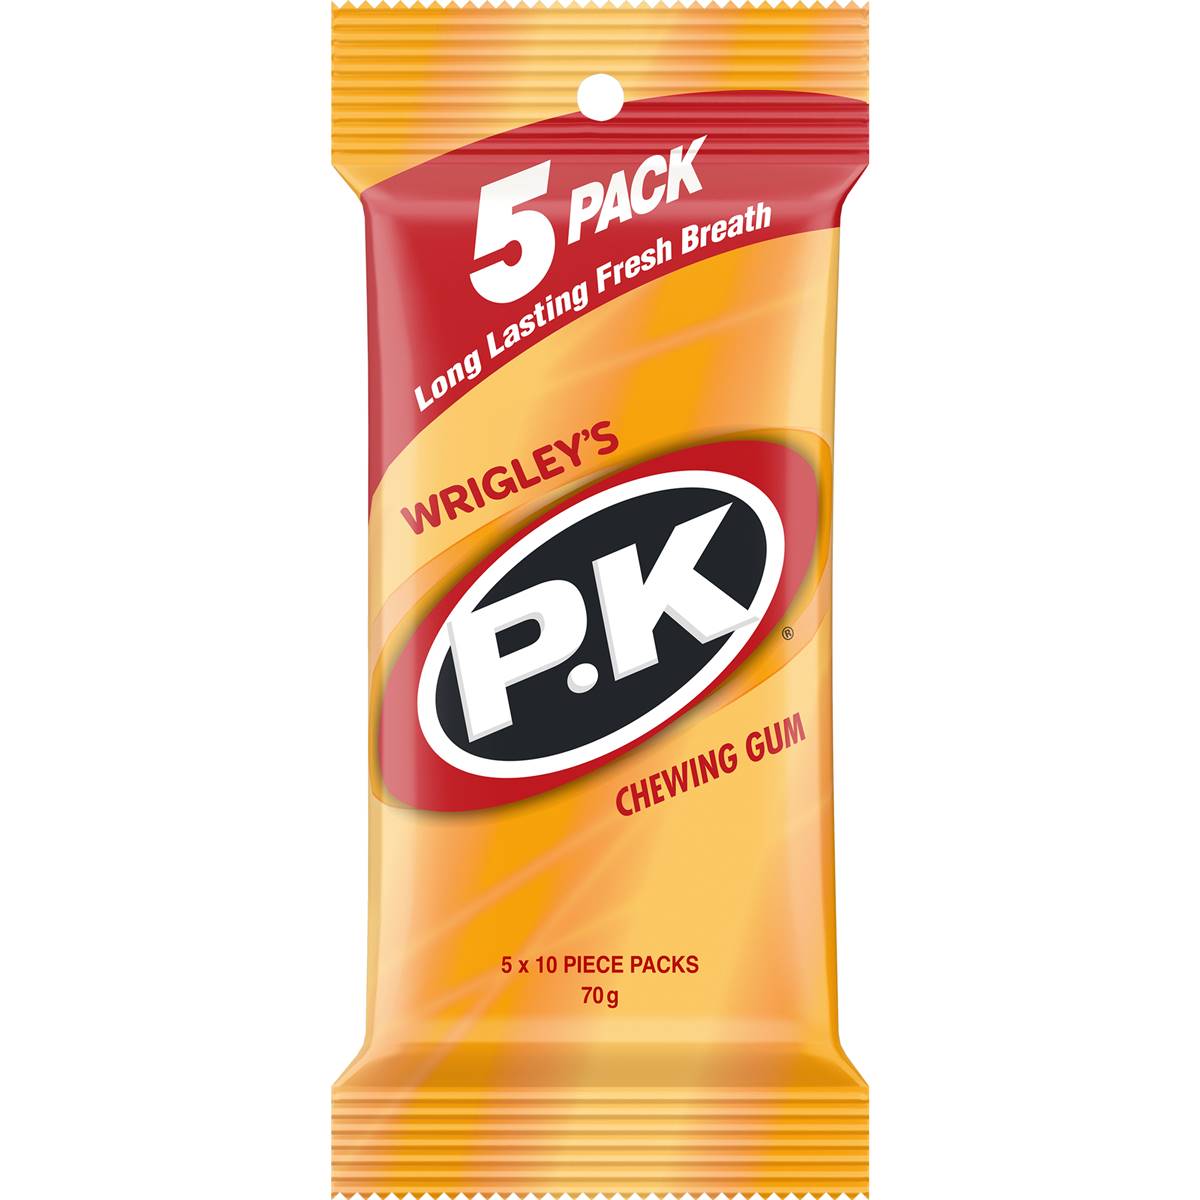 Calories in Wrigley's P.k Gold Original Chewing Gum Multipack 5x10 Piece